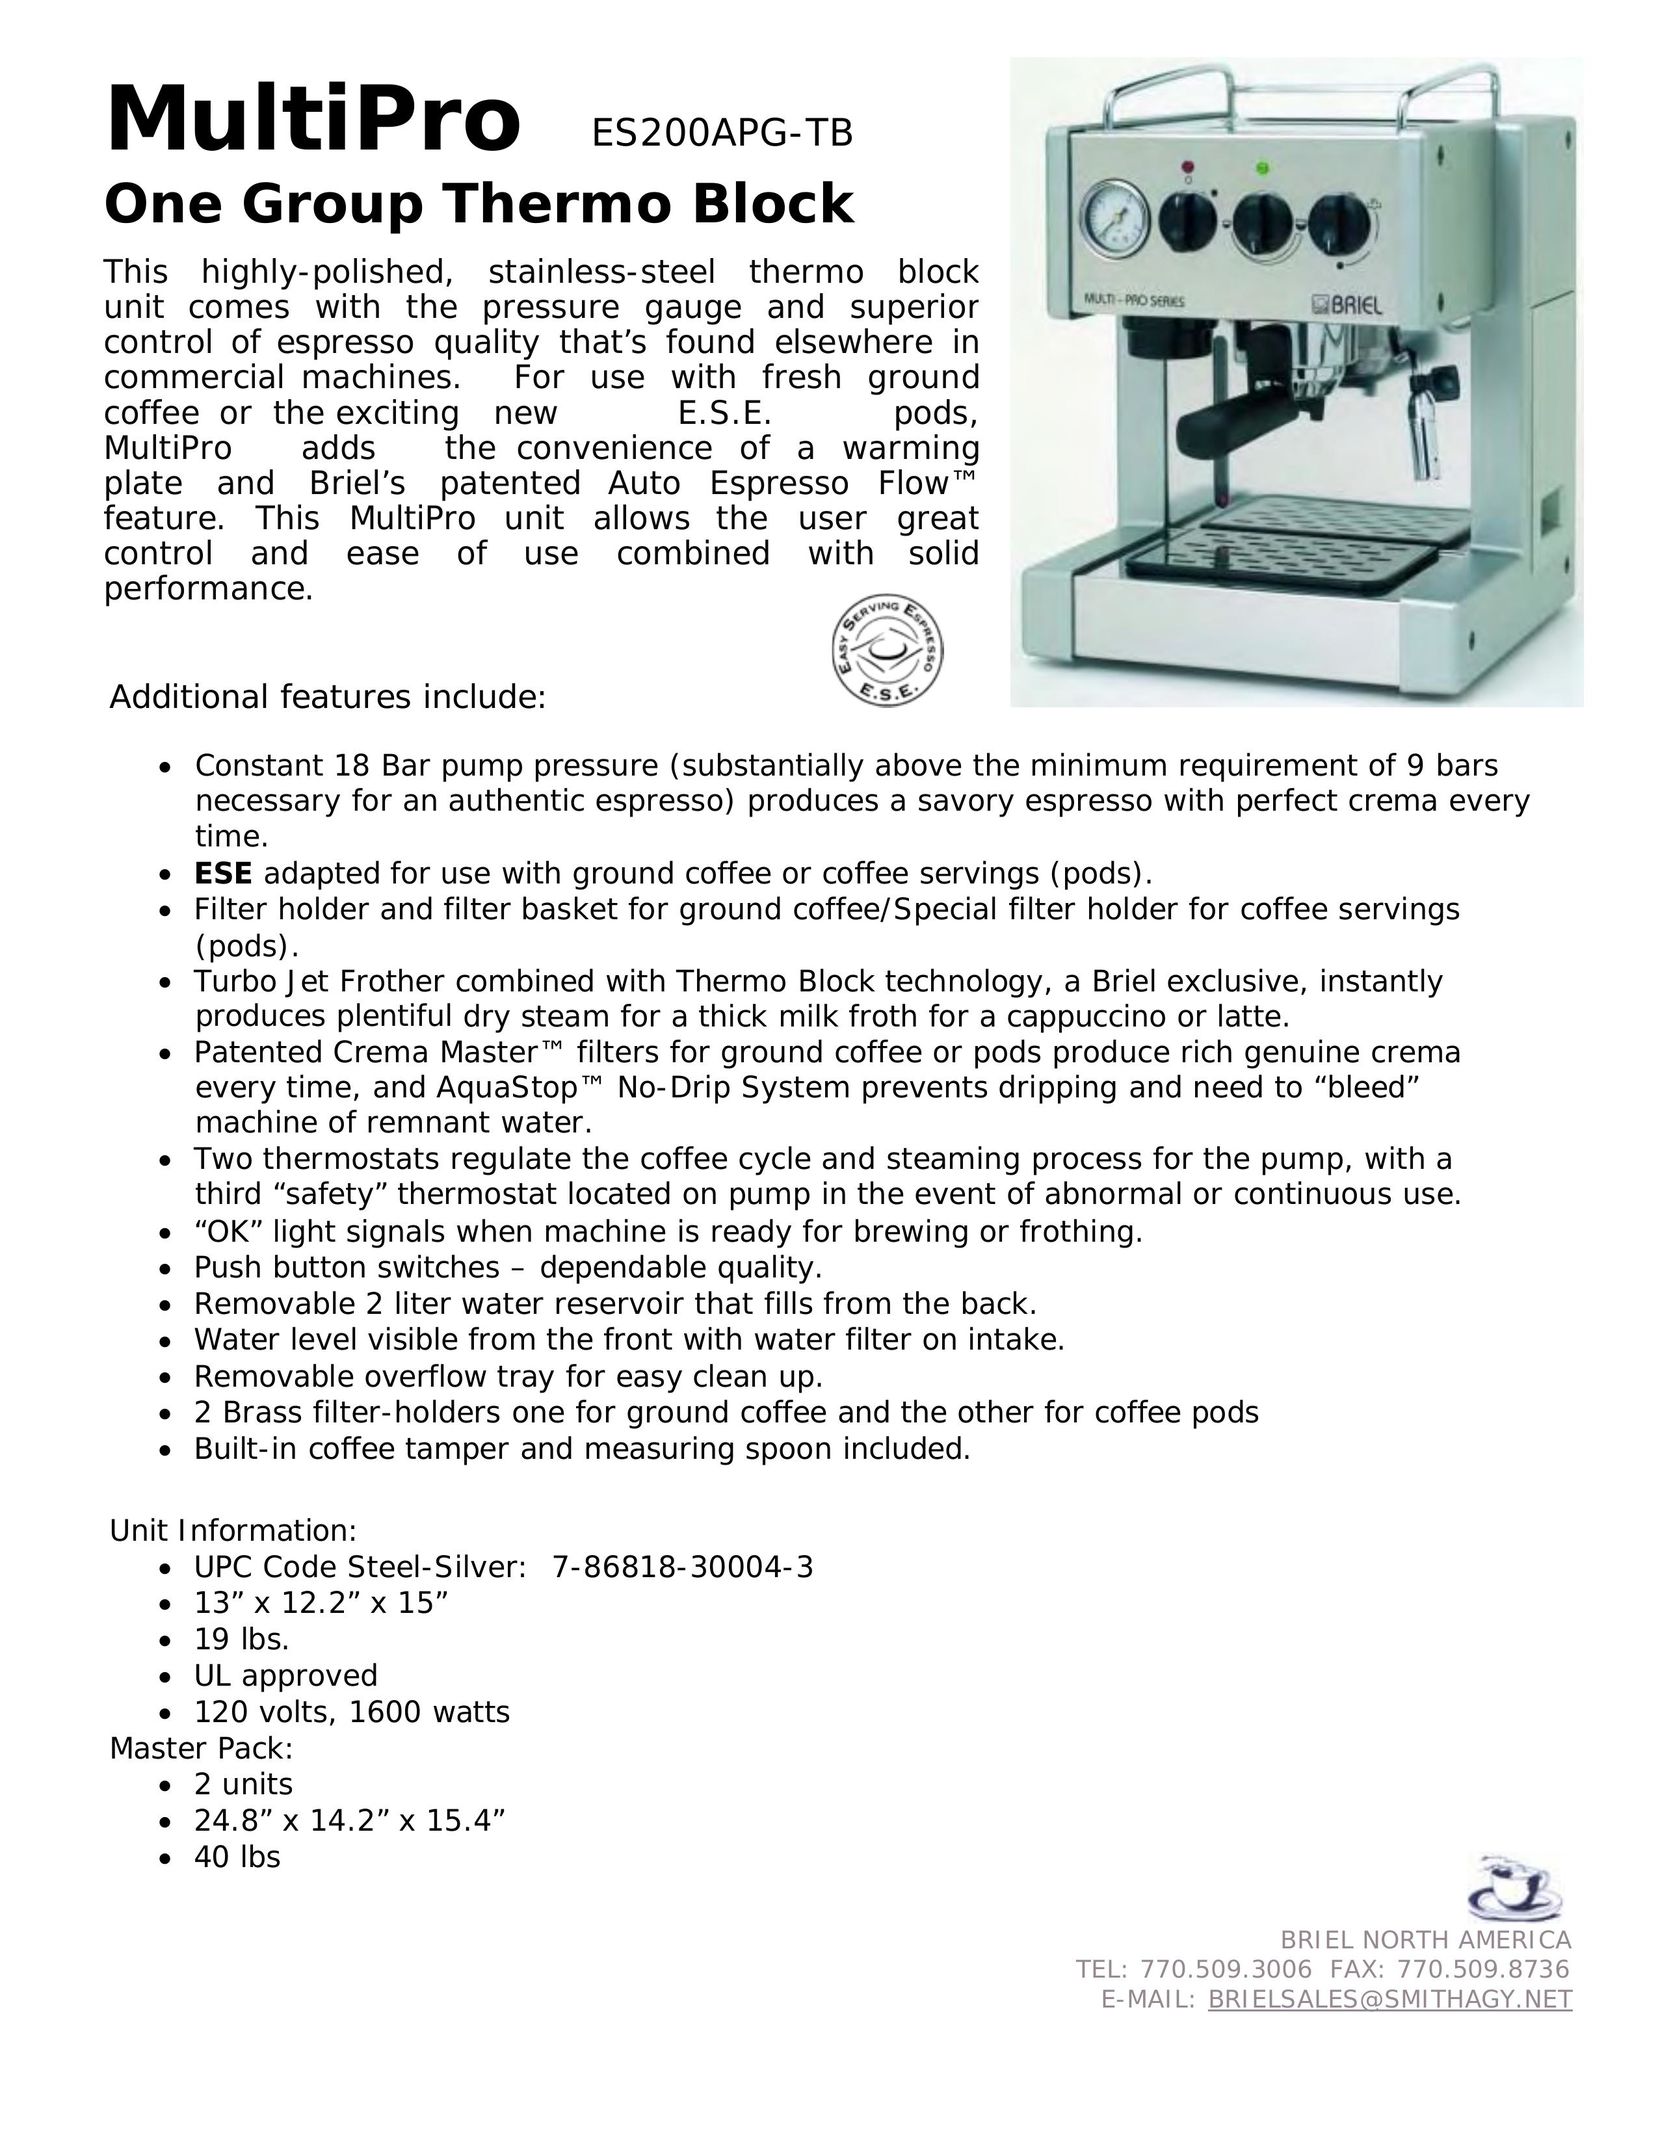 Briel ES200APG-TB Hot Beverage Maker User Manual